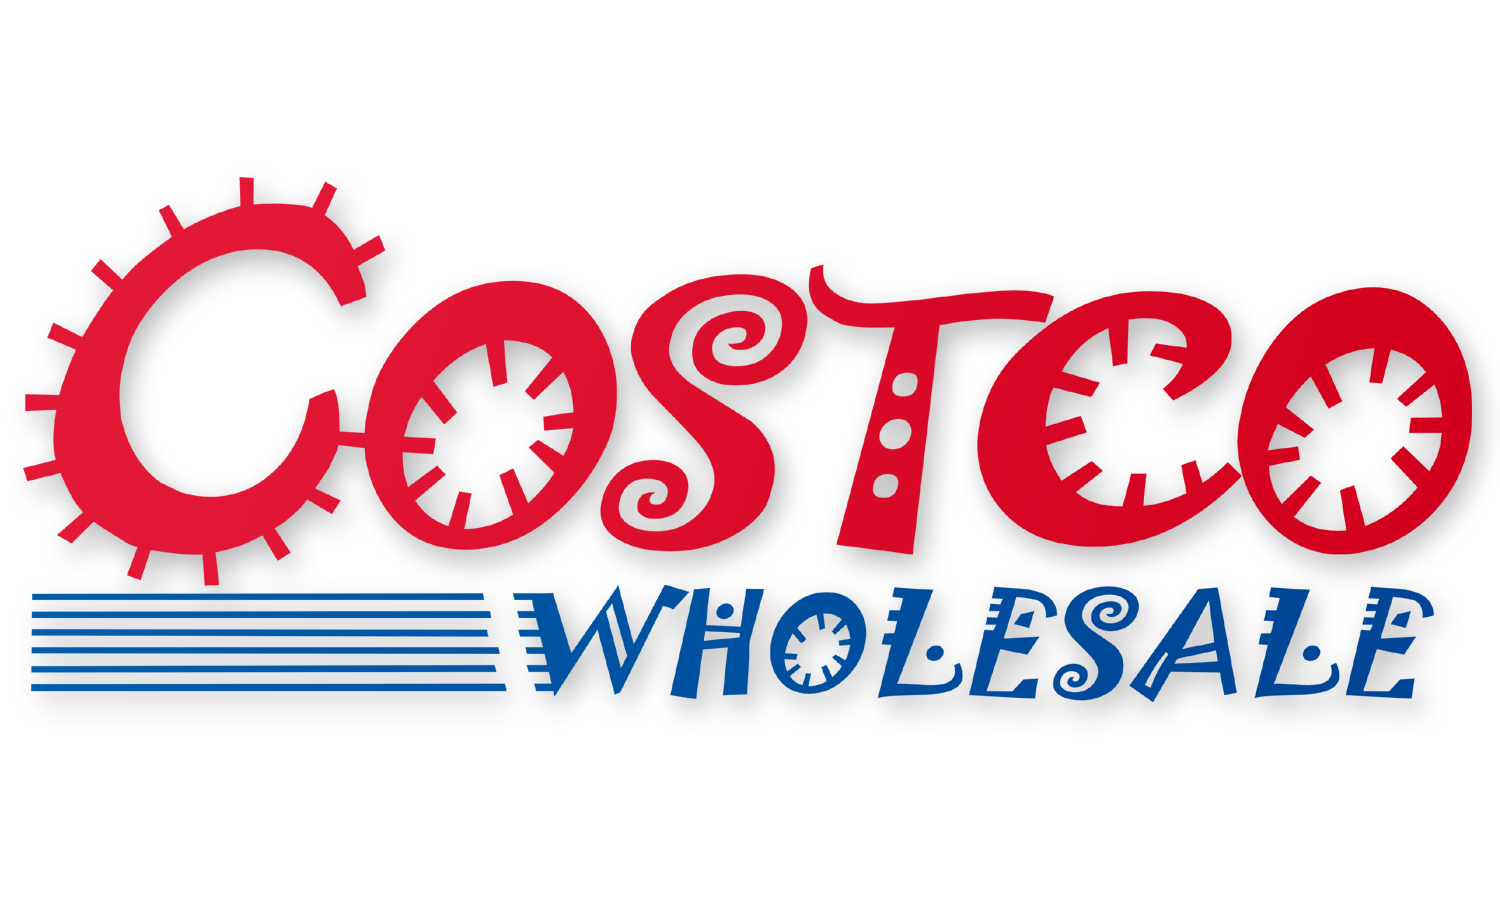 Costco Logo Images   Super Cars Club